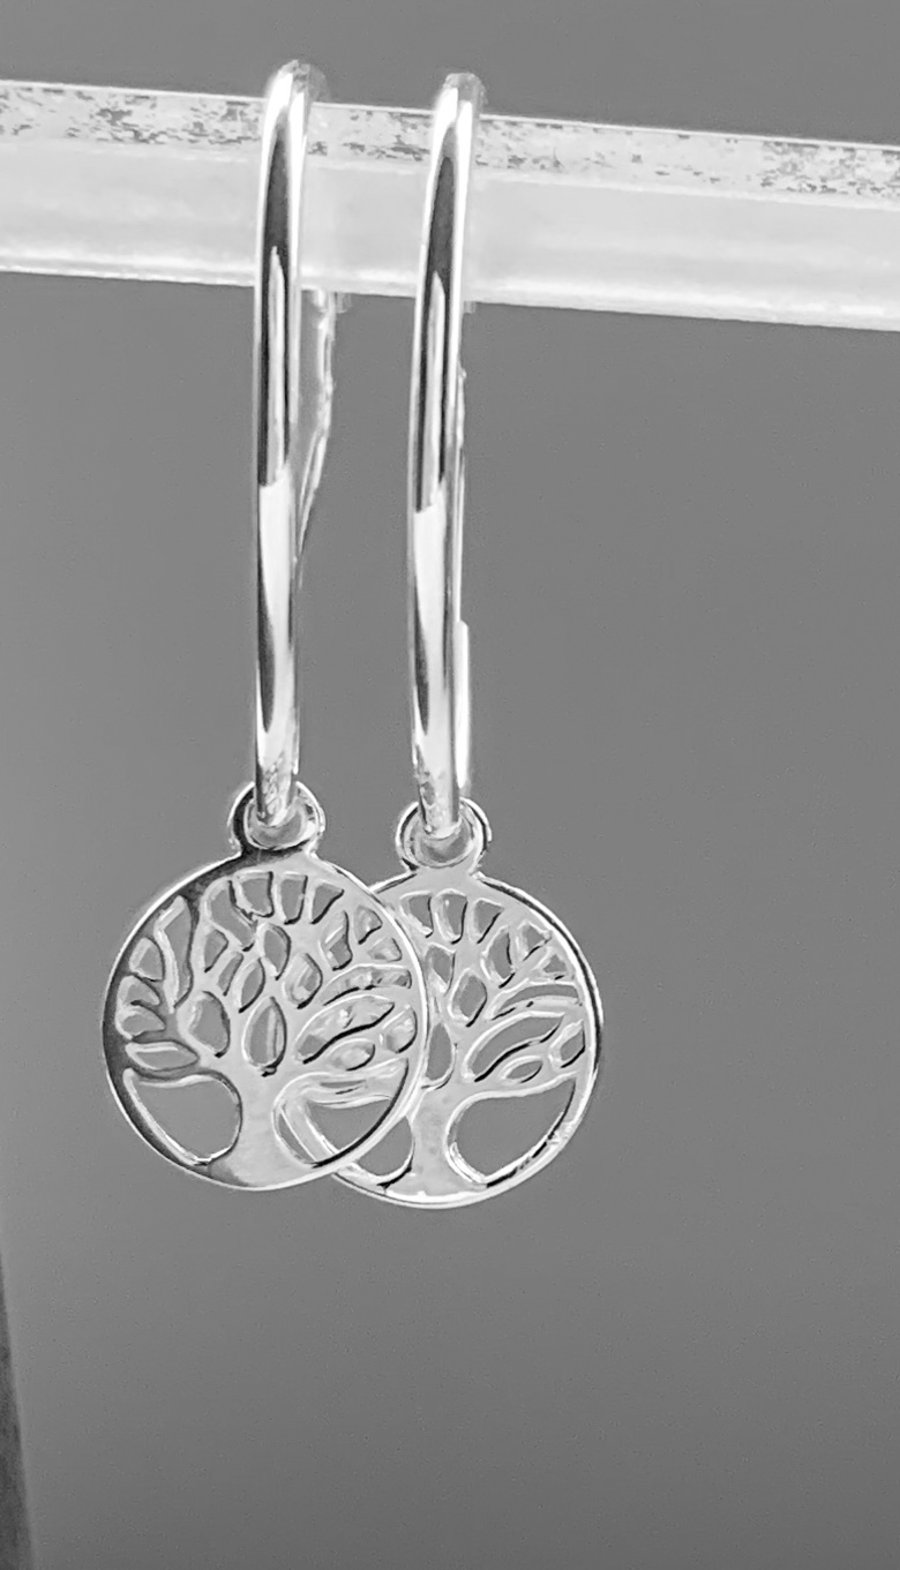 Sterling silver hoop earrings with tree of life charm